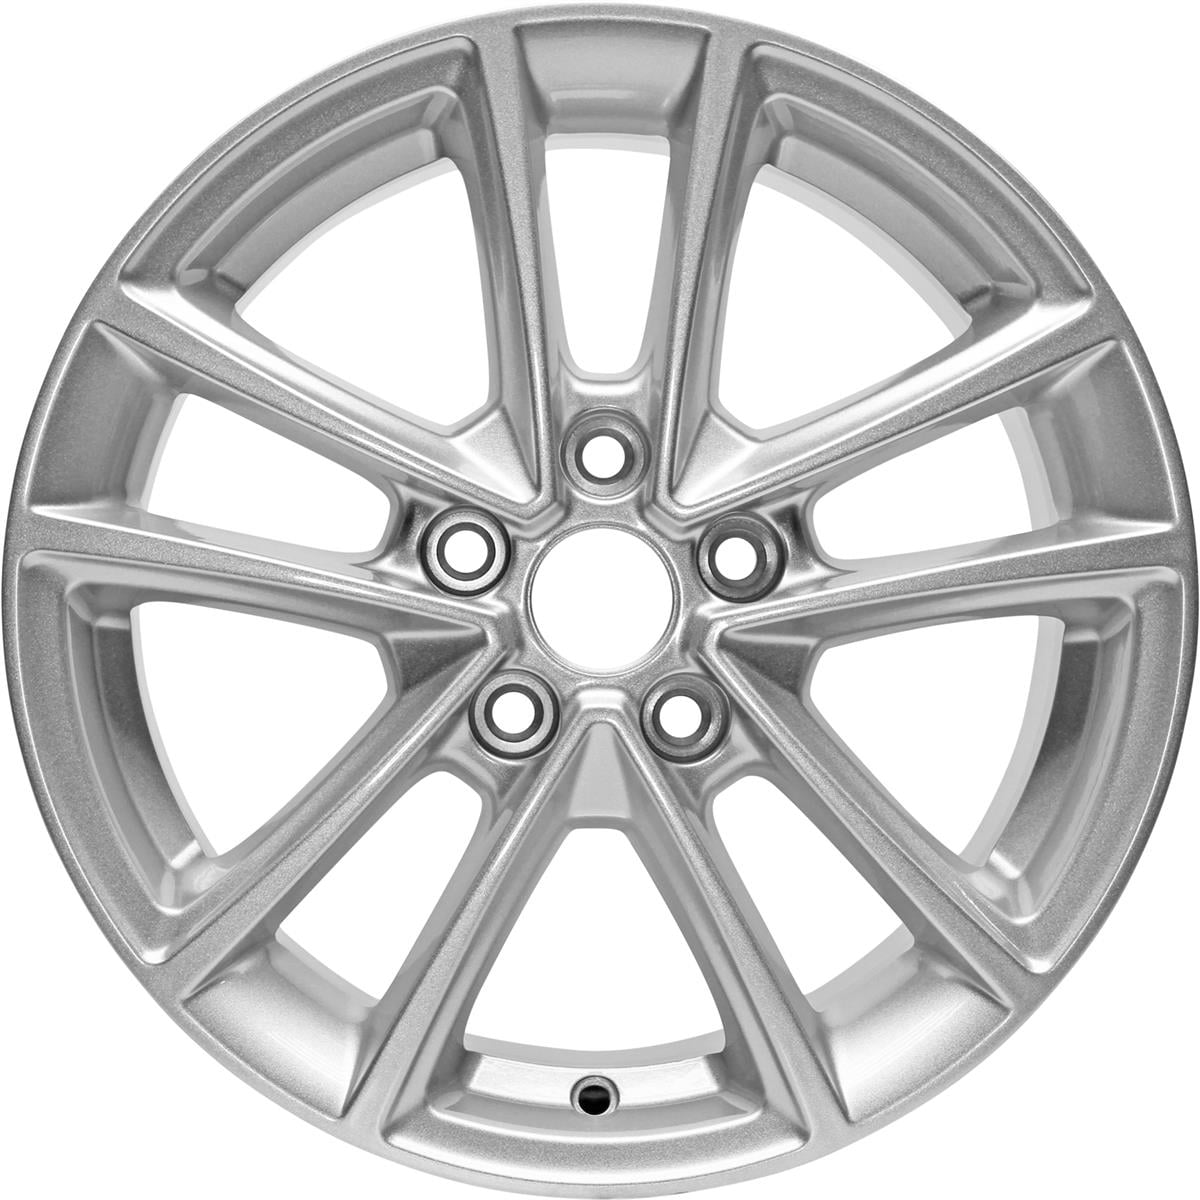 Vibrate participant Footpad New Aluminum Wheel 16 Inch for 15-18 Ford Focus 16x7 Rim 5 Lug 108mm -  Walmart.com